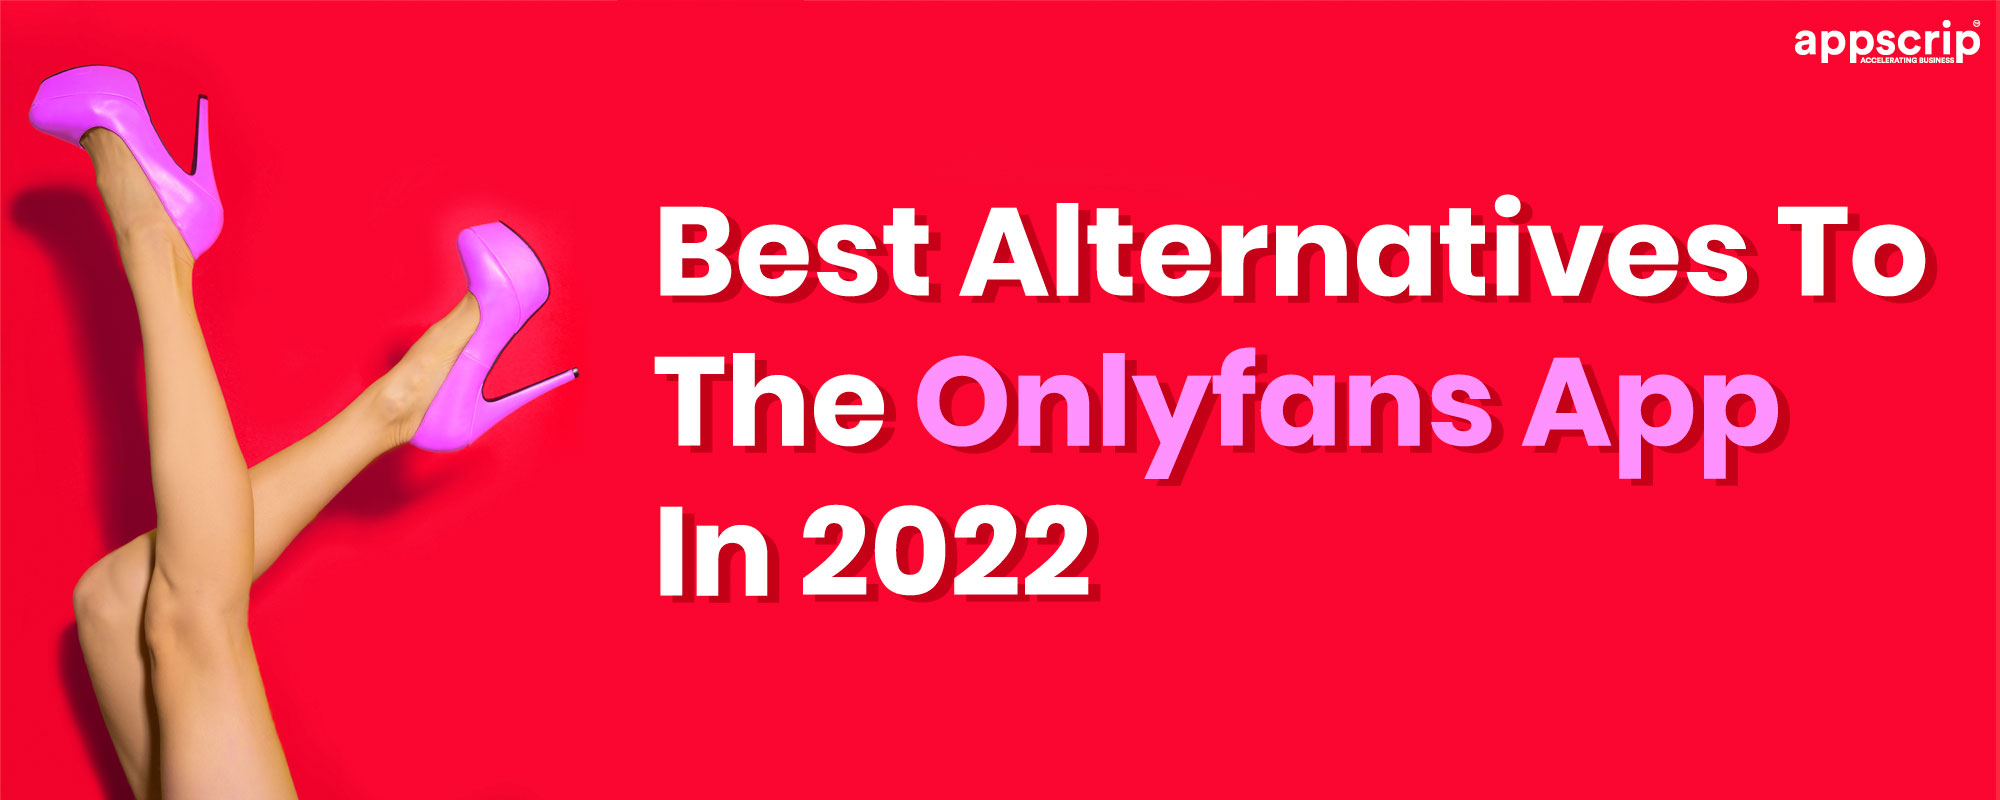 alternative to onlyfans 2022